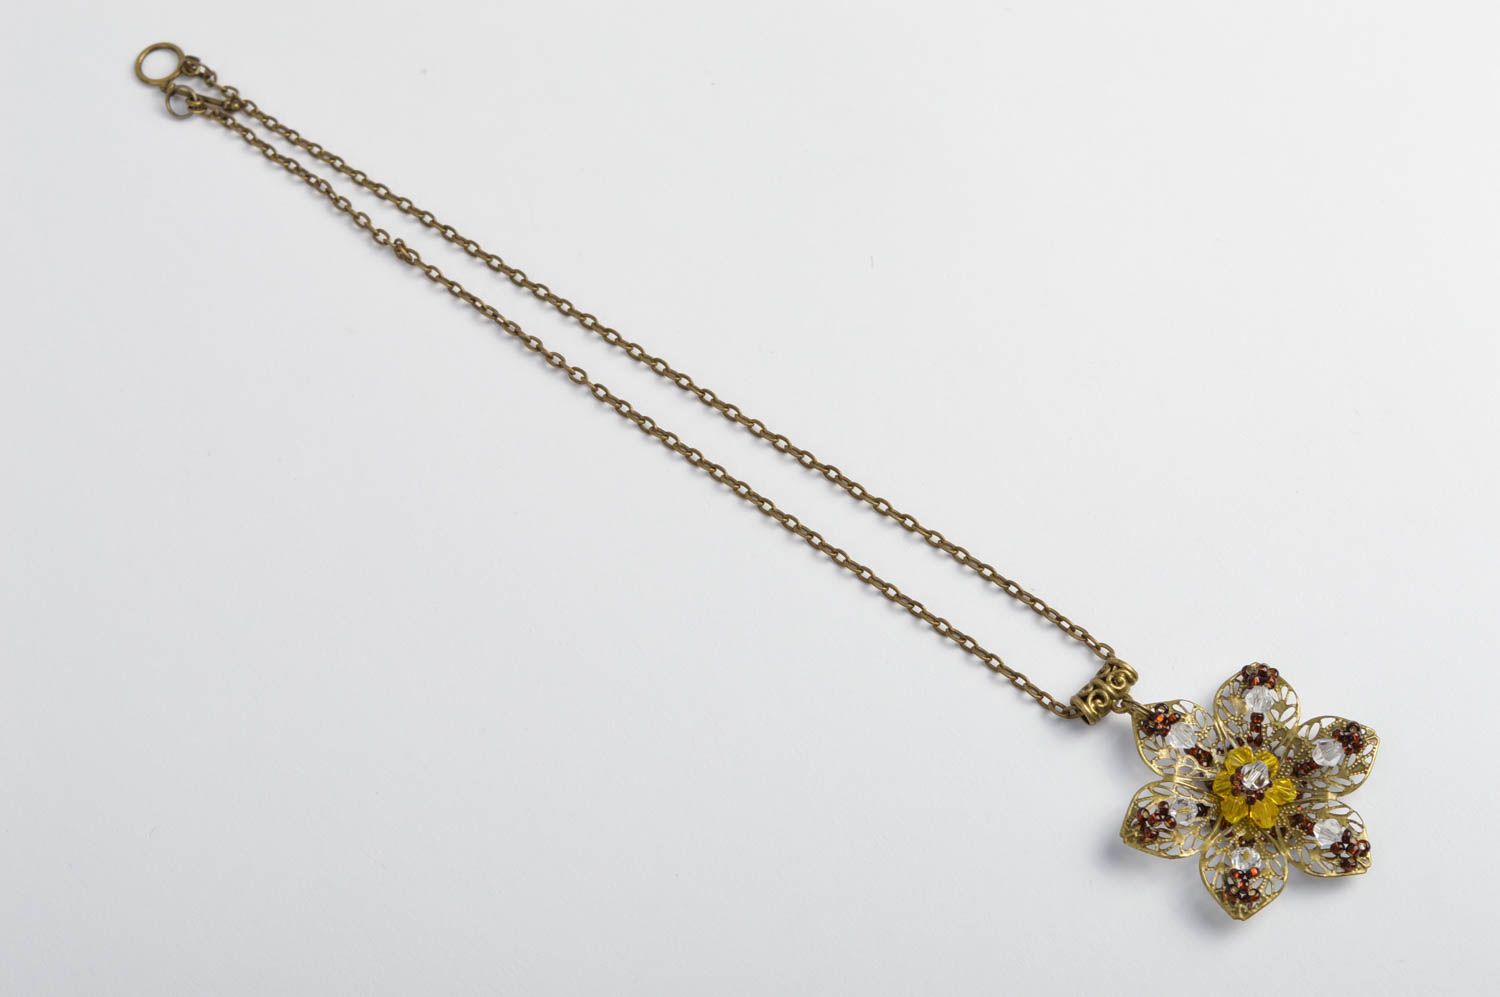 Handmade necklace pendant vintage designer bijouterie accessory for woman photo 5